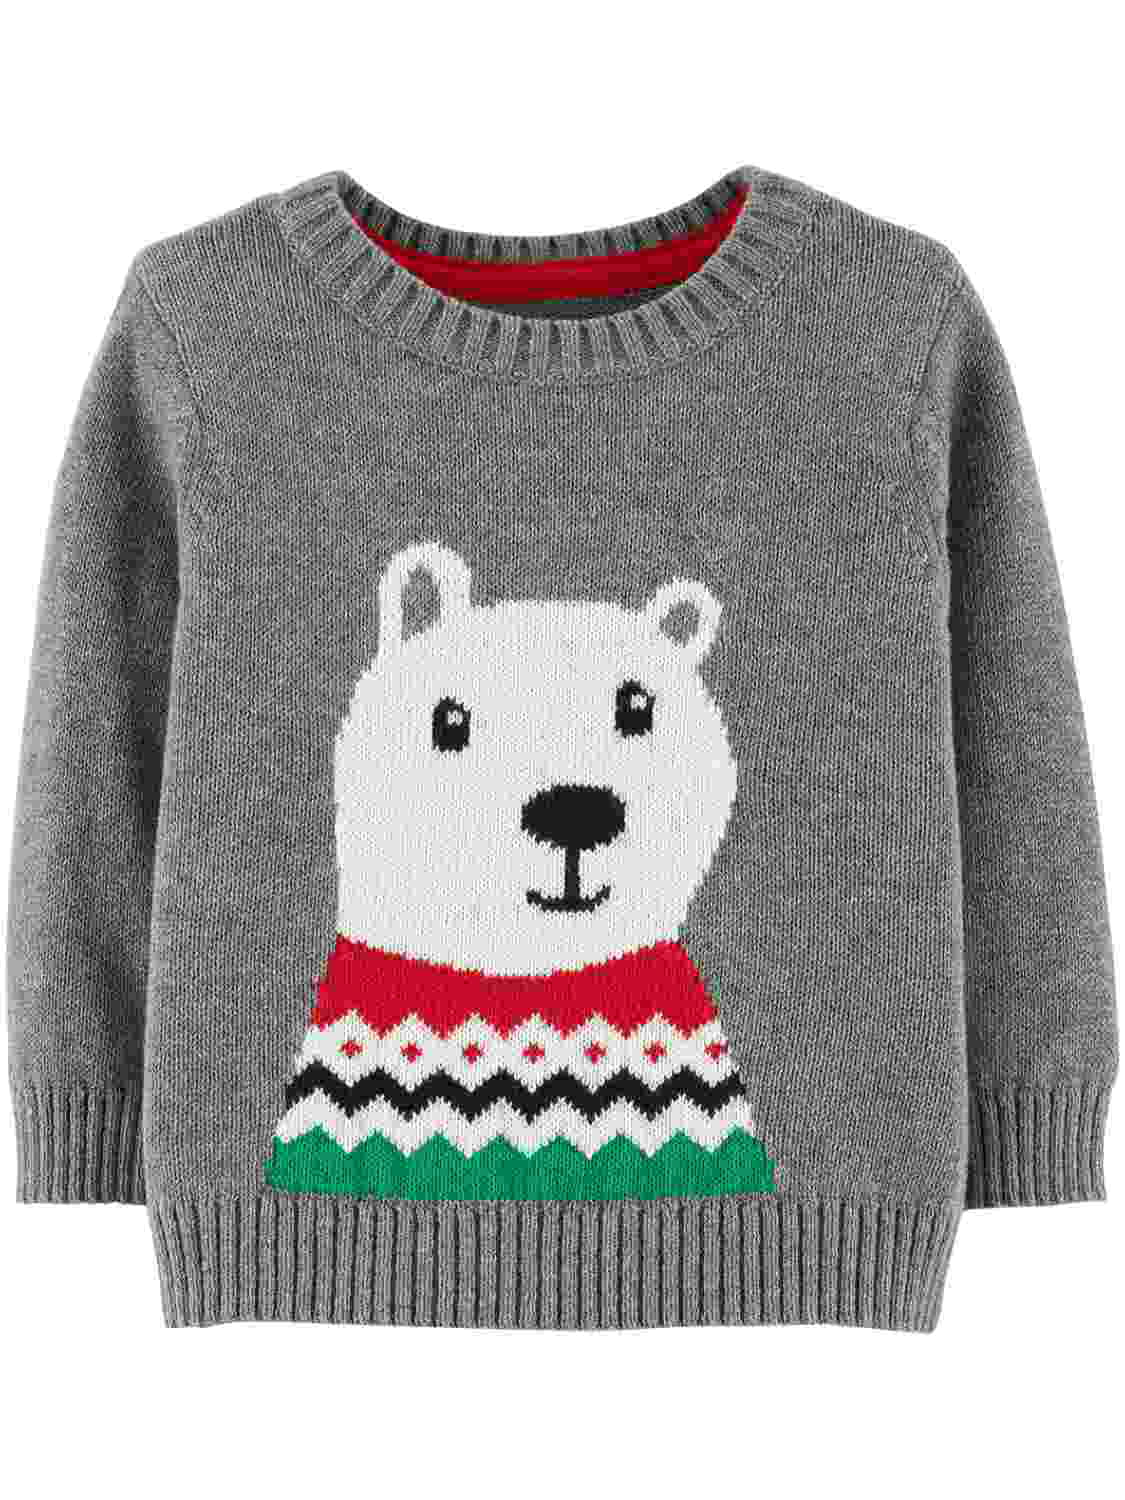 Carter's Carters Infant Boys Gray Polar Bear Knit Baby Sweater